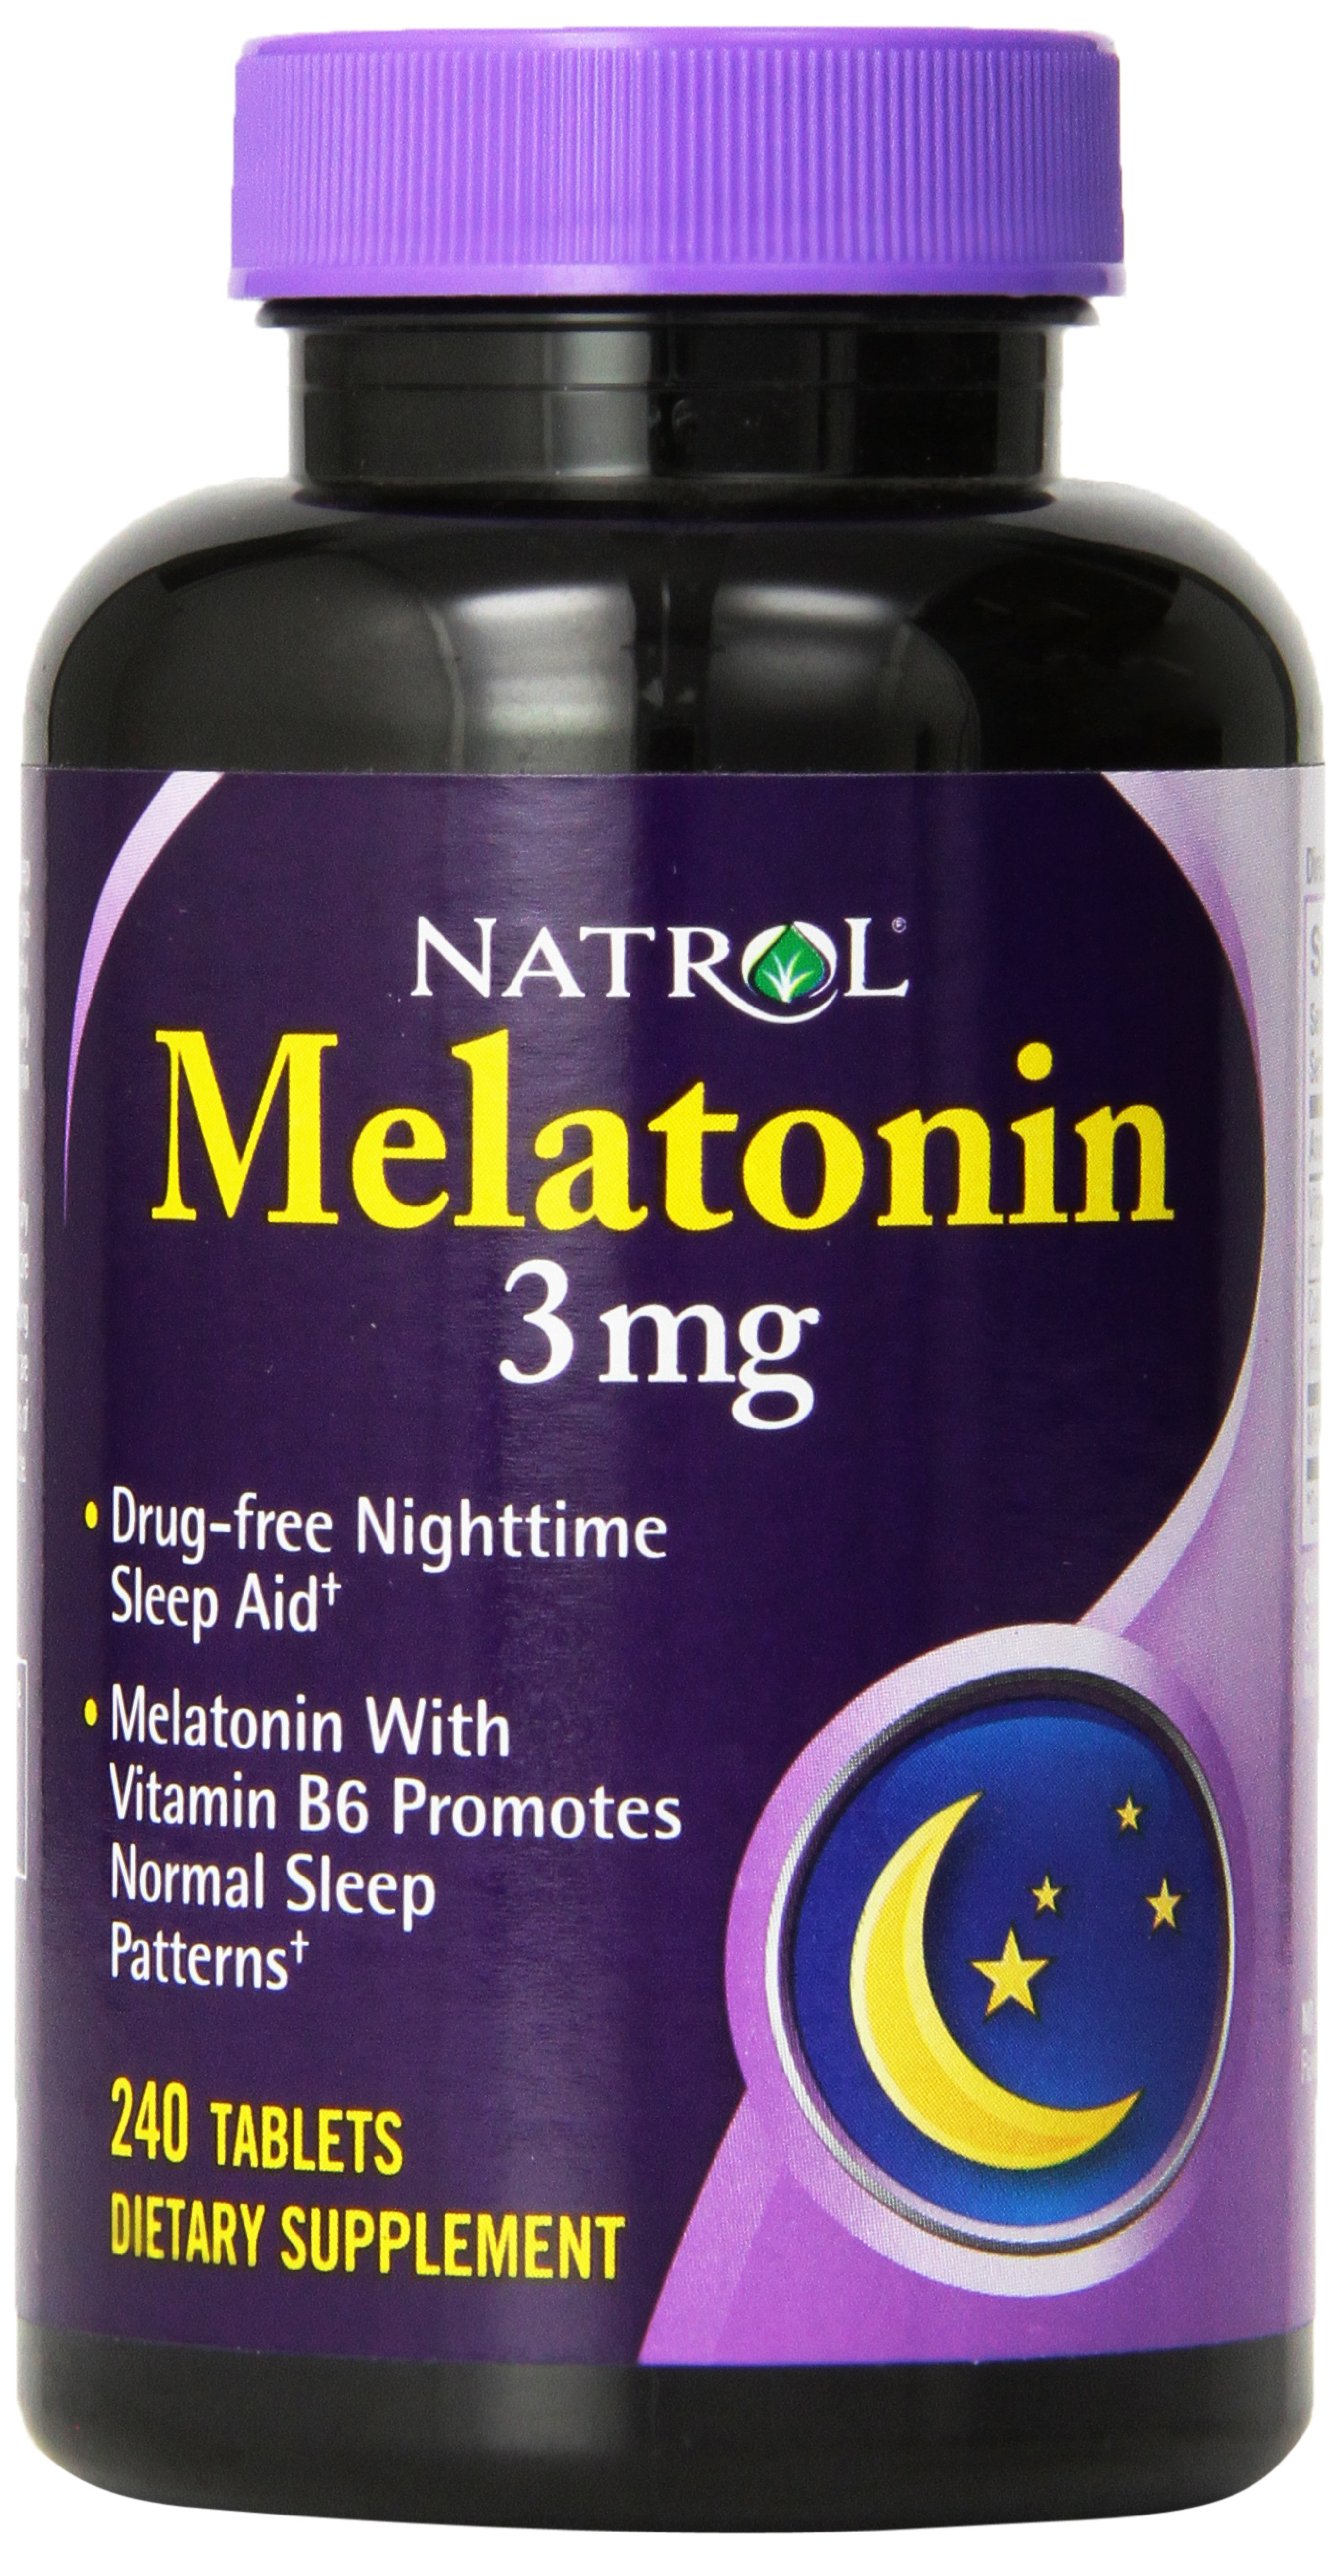 Natrol Melatonin Helps You Fall Asleep Faster Stay Asleep Longer Faster Absorption 100 Vegetarian 3mg, (Tablets), 240 Count $9.14